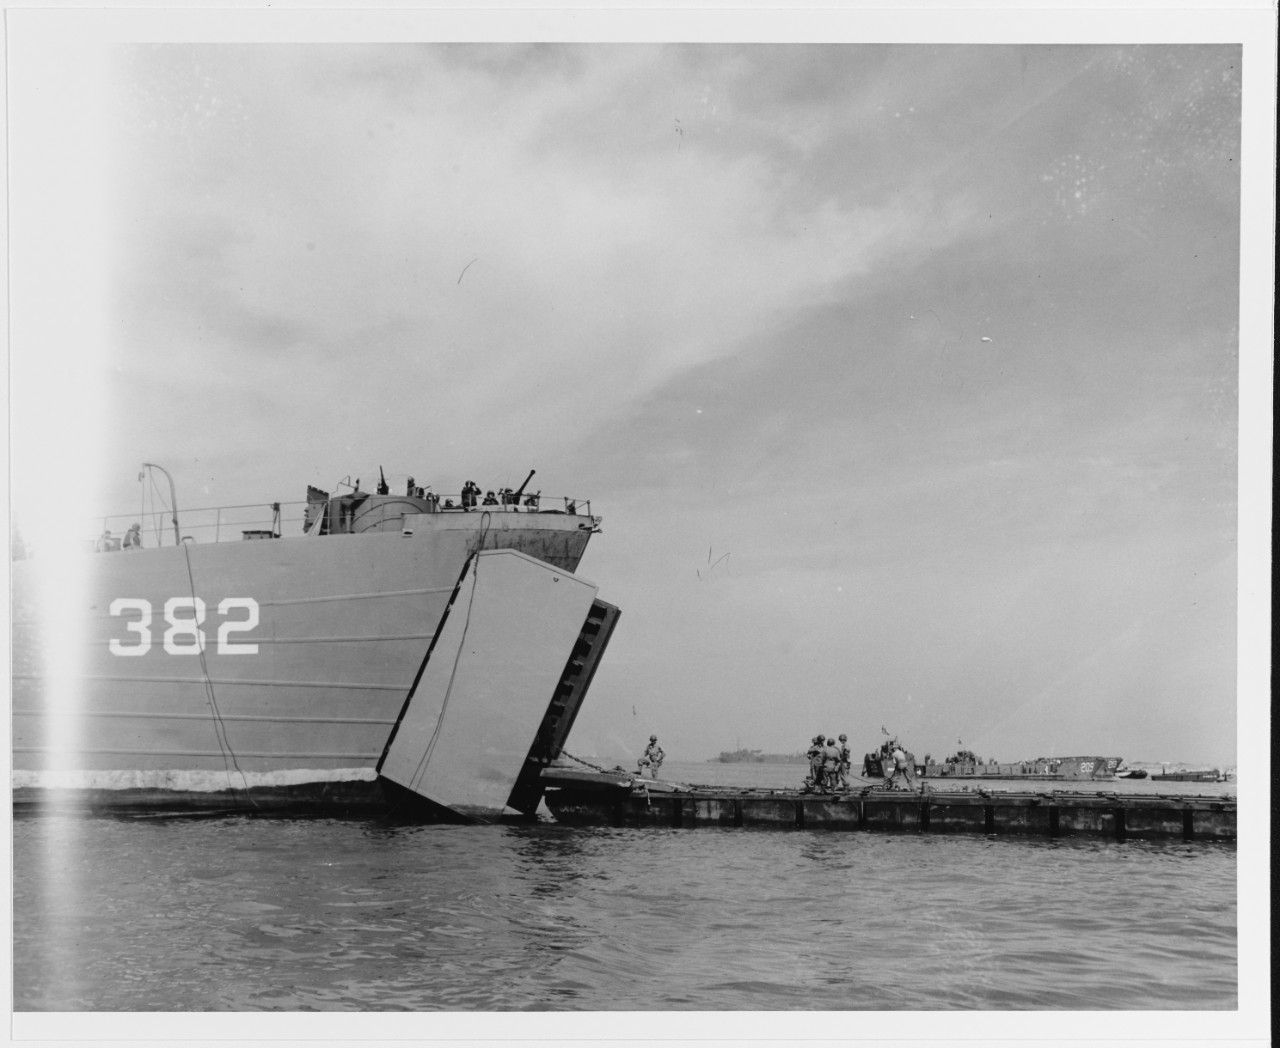 Salerno Landing, Sept. 1943